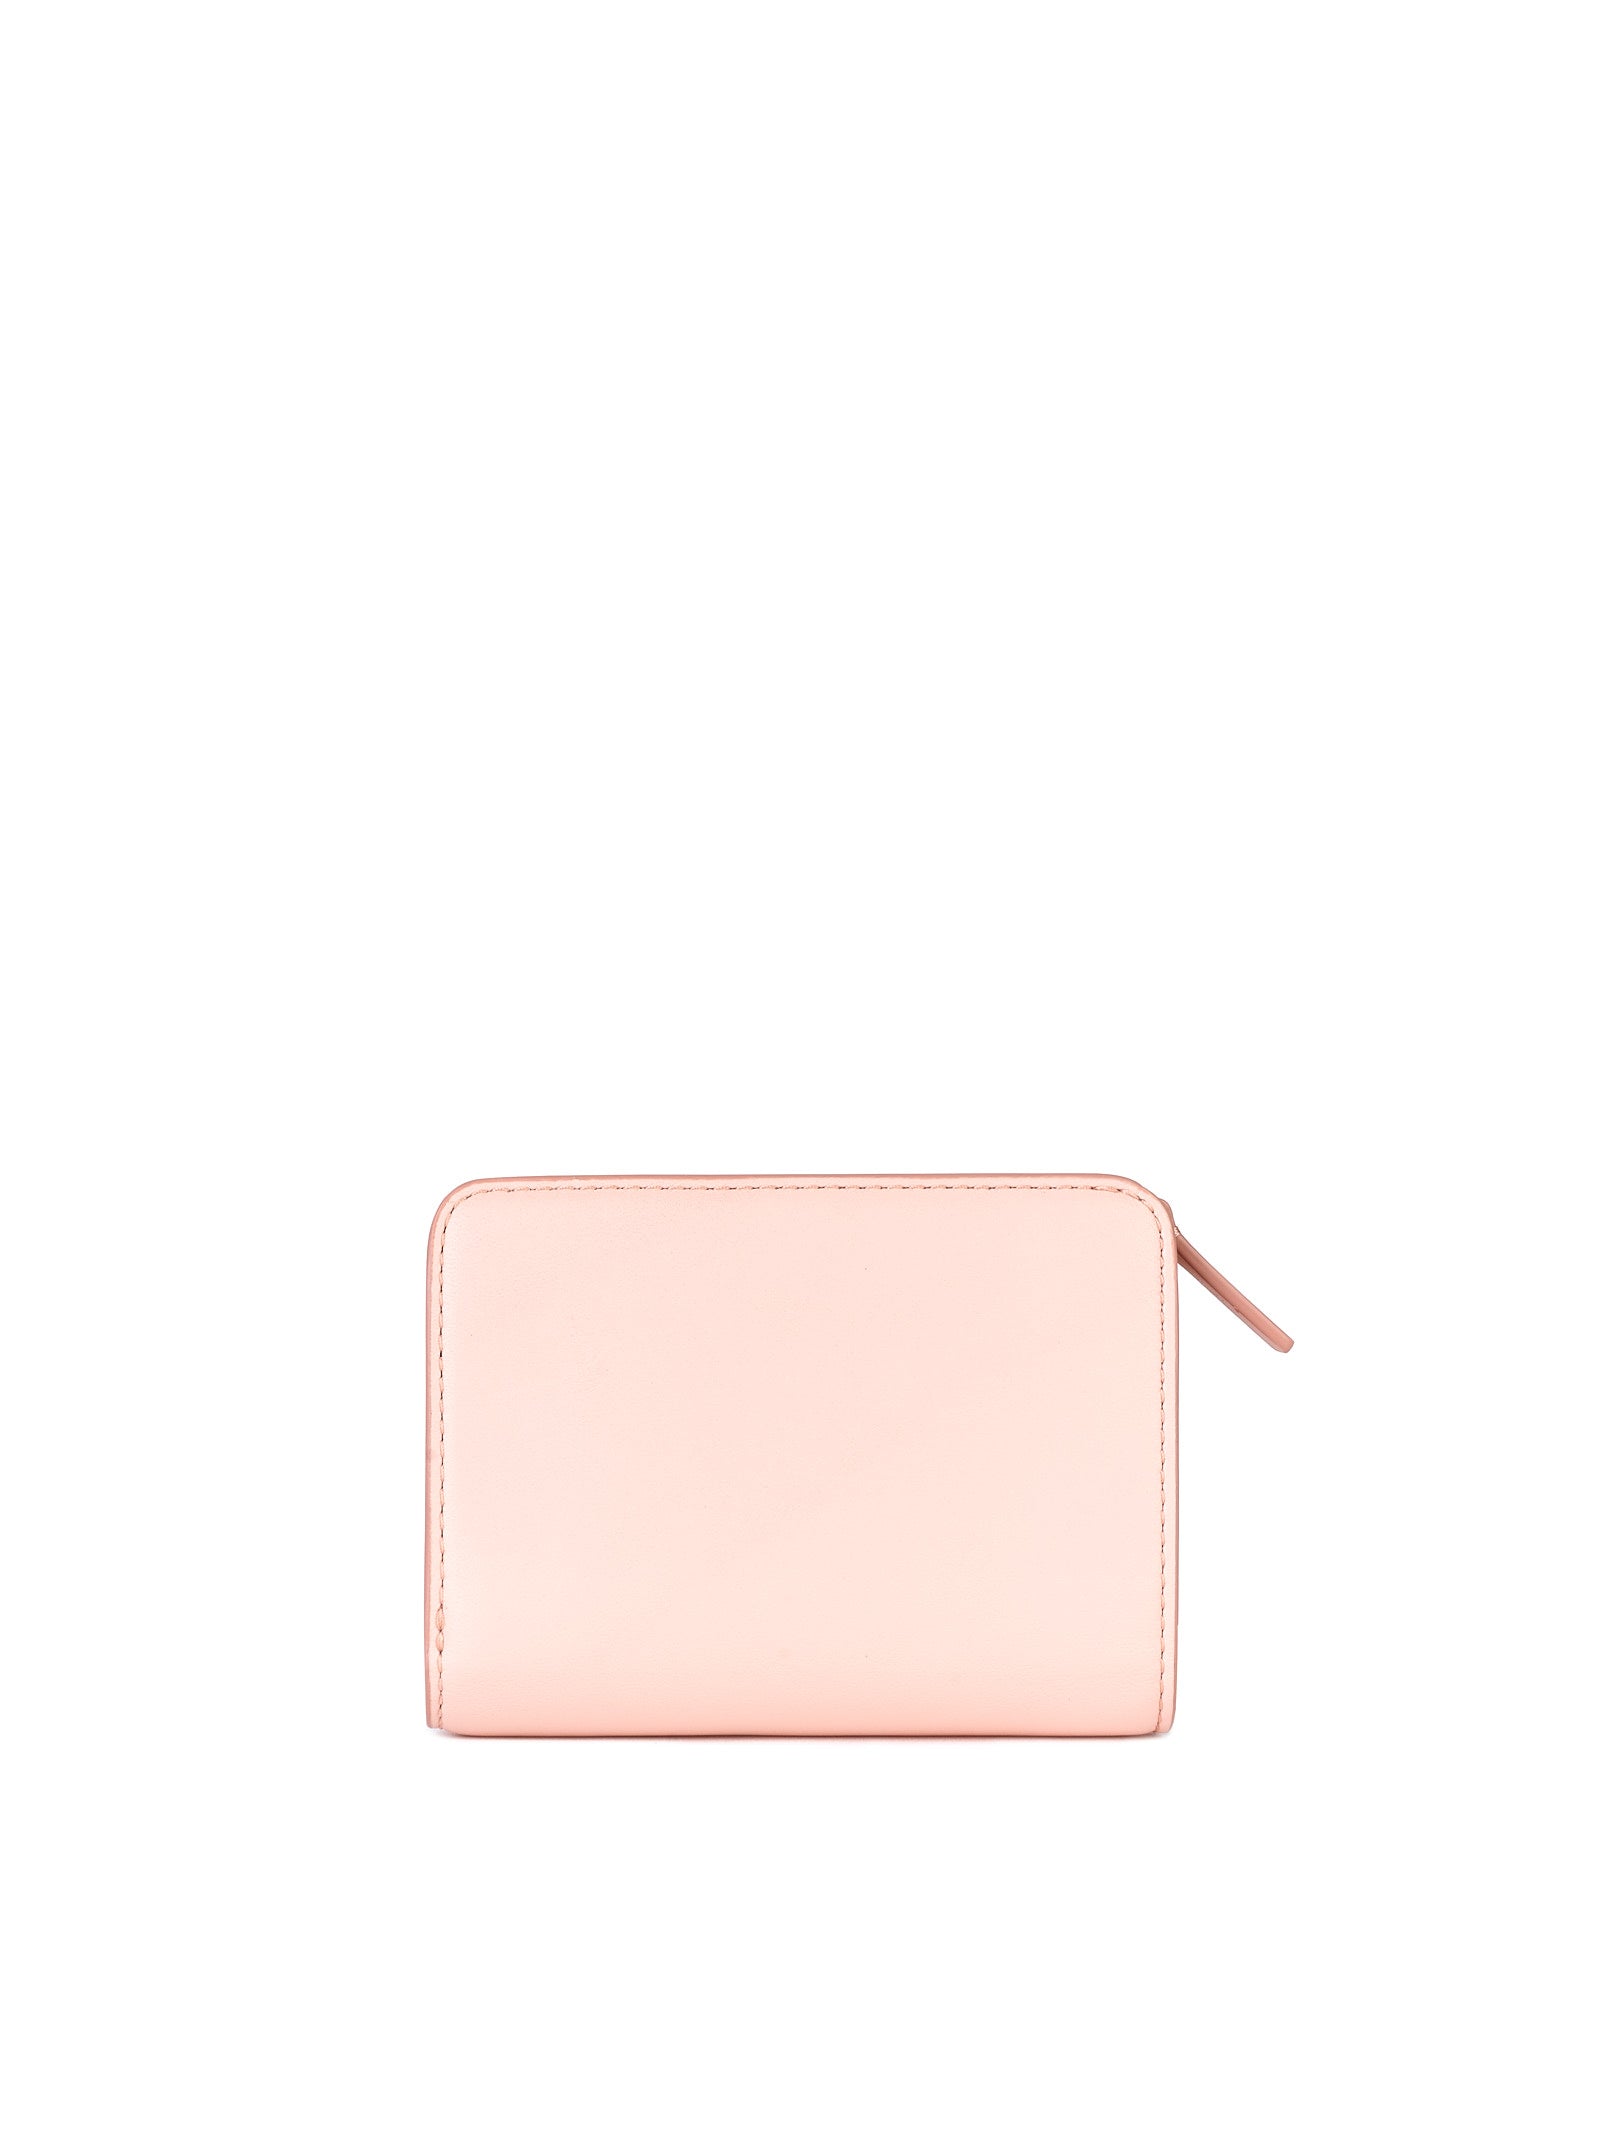 Portafogli MARC JACOBS Mini compact wallet
Rose